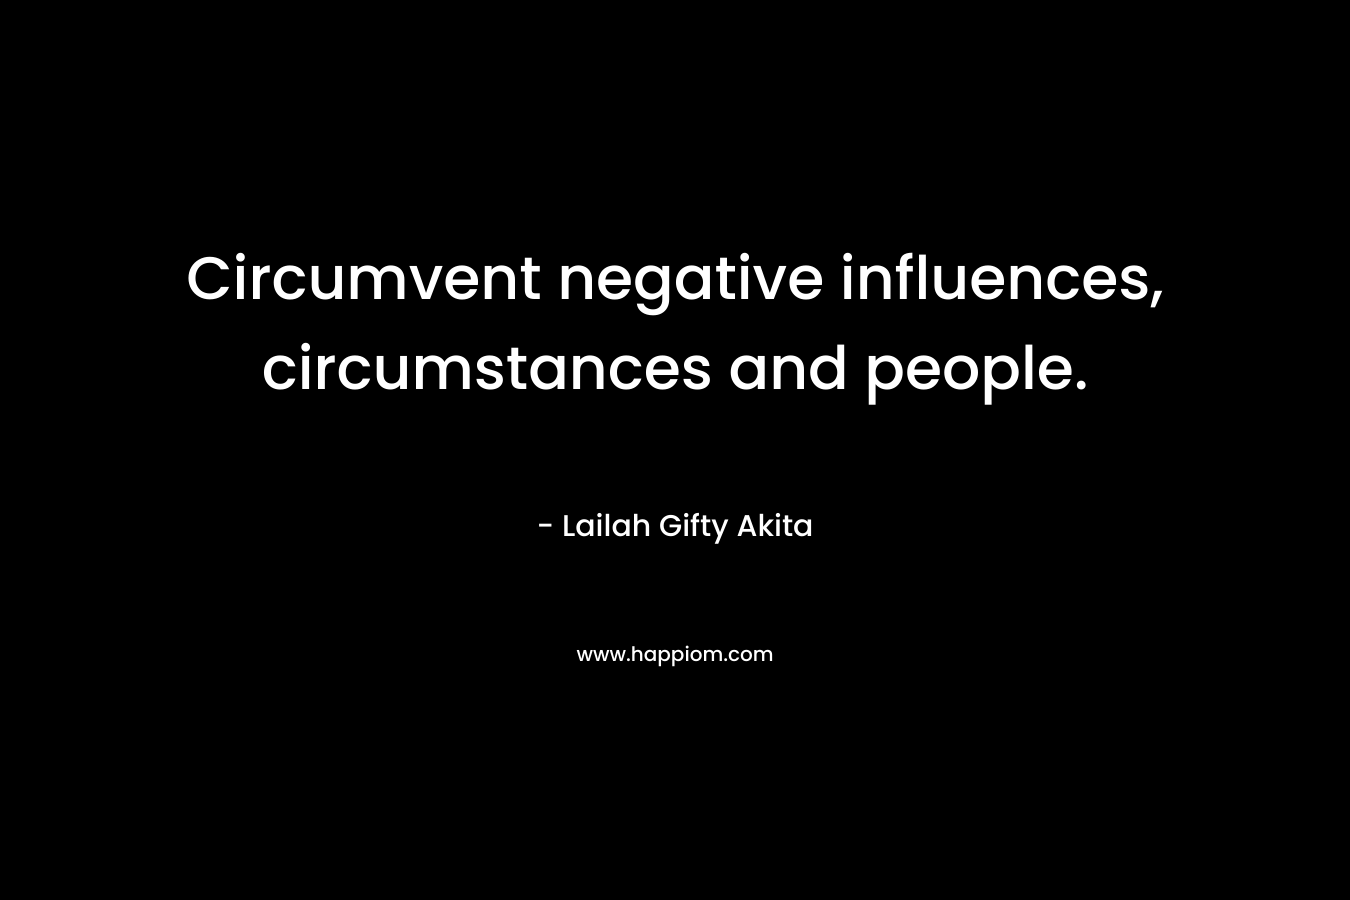 Circumvent negative influences, circumstances and people.